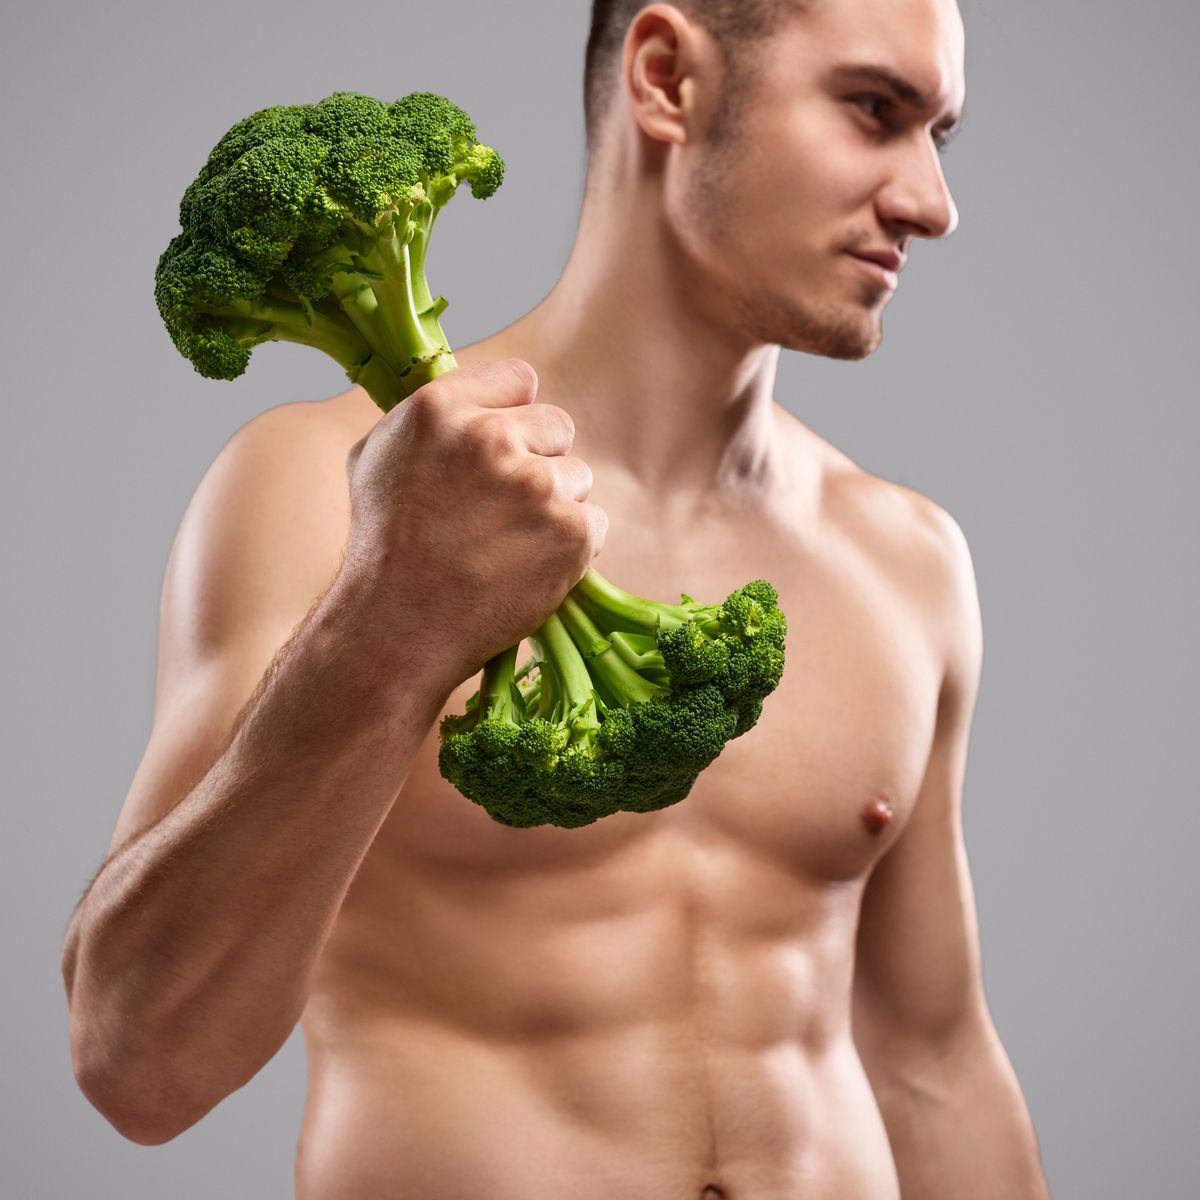 Shirtless man exercising with broccoli